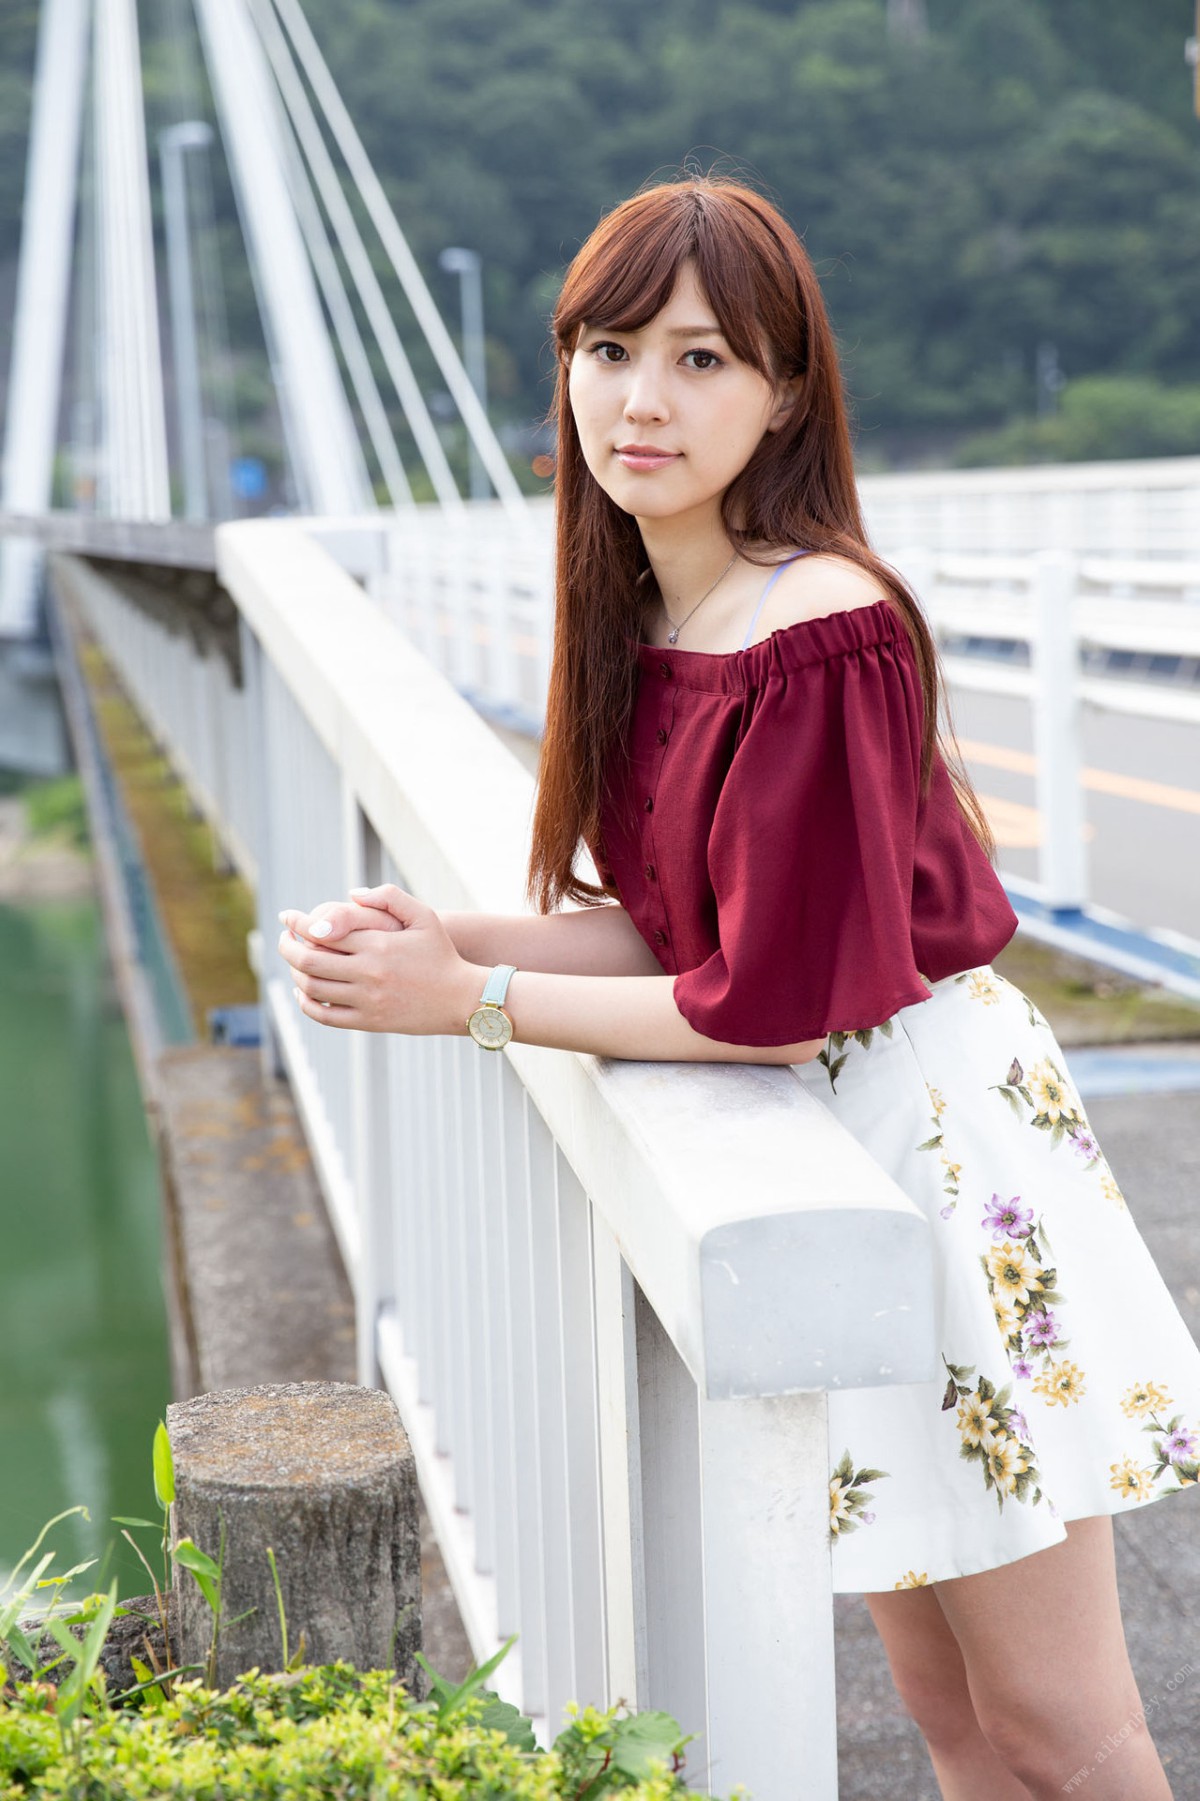 Photobook 2019 07 19 Asuna Kawai Maria Aine Nozomi Arimura 2 Days 1 Night Hot Spring Date 0029 3553654923.jpg